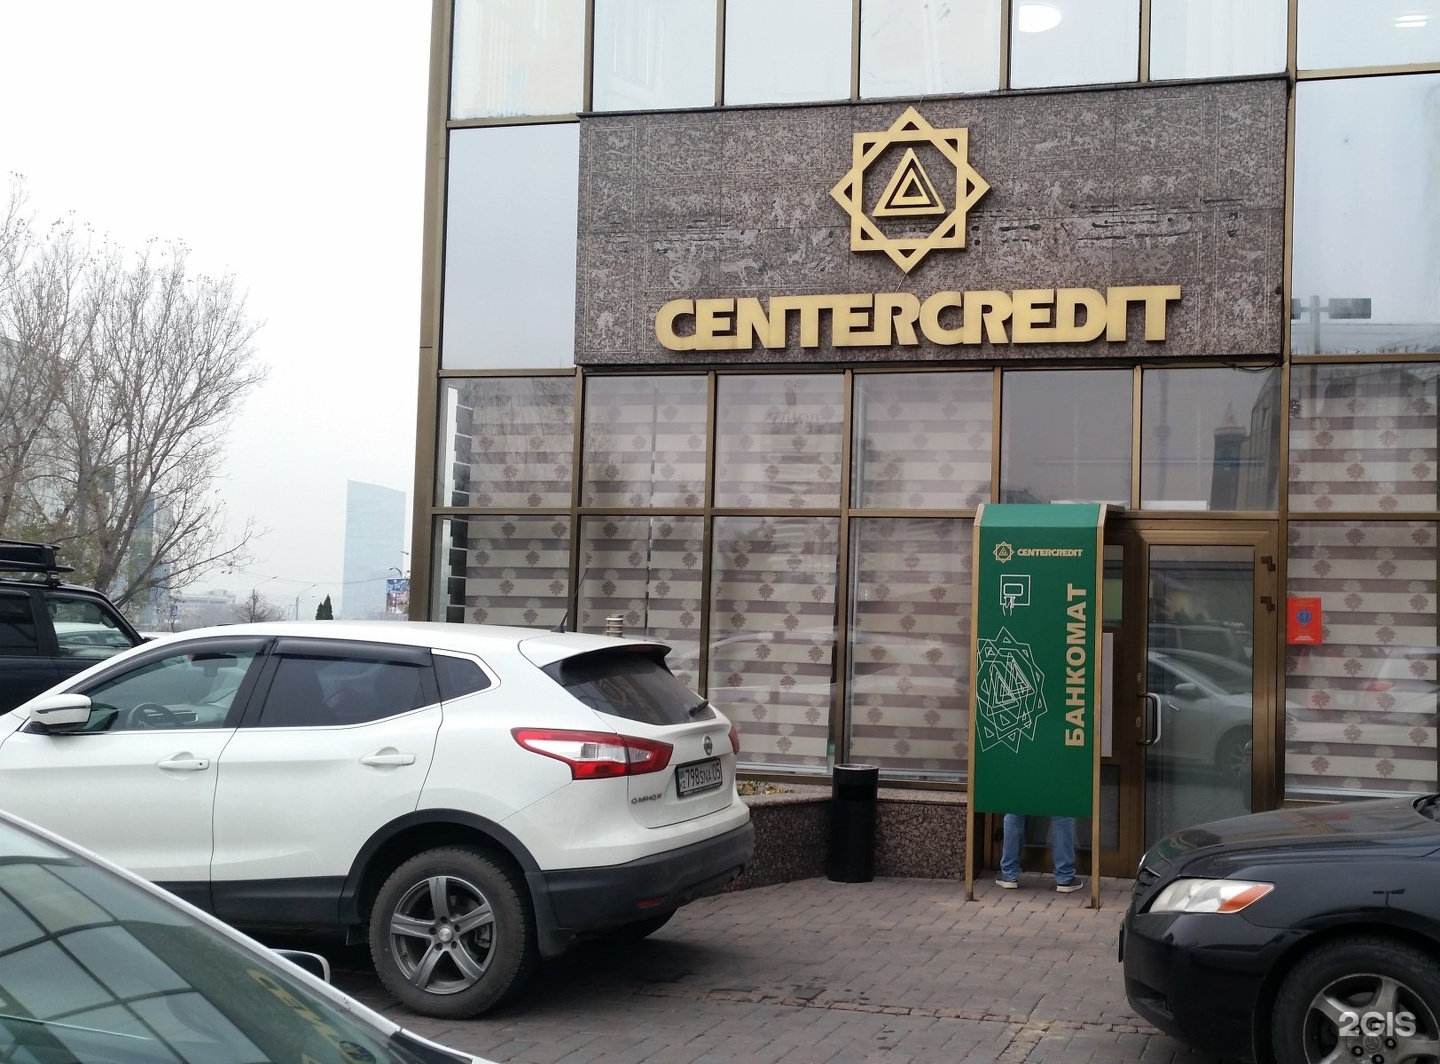 Bank centercredit